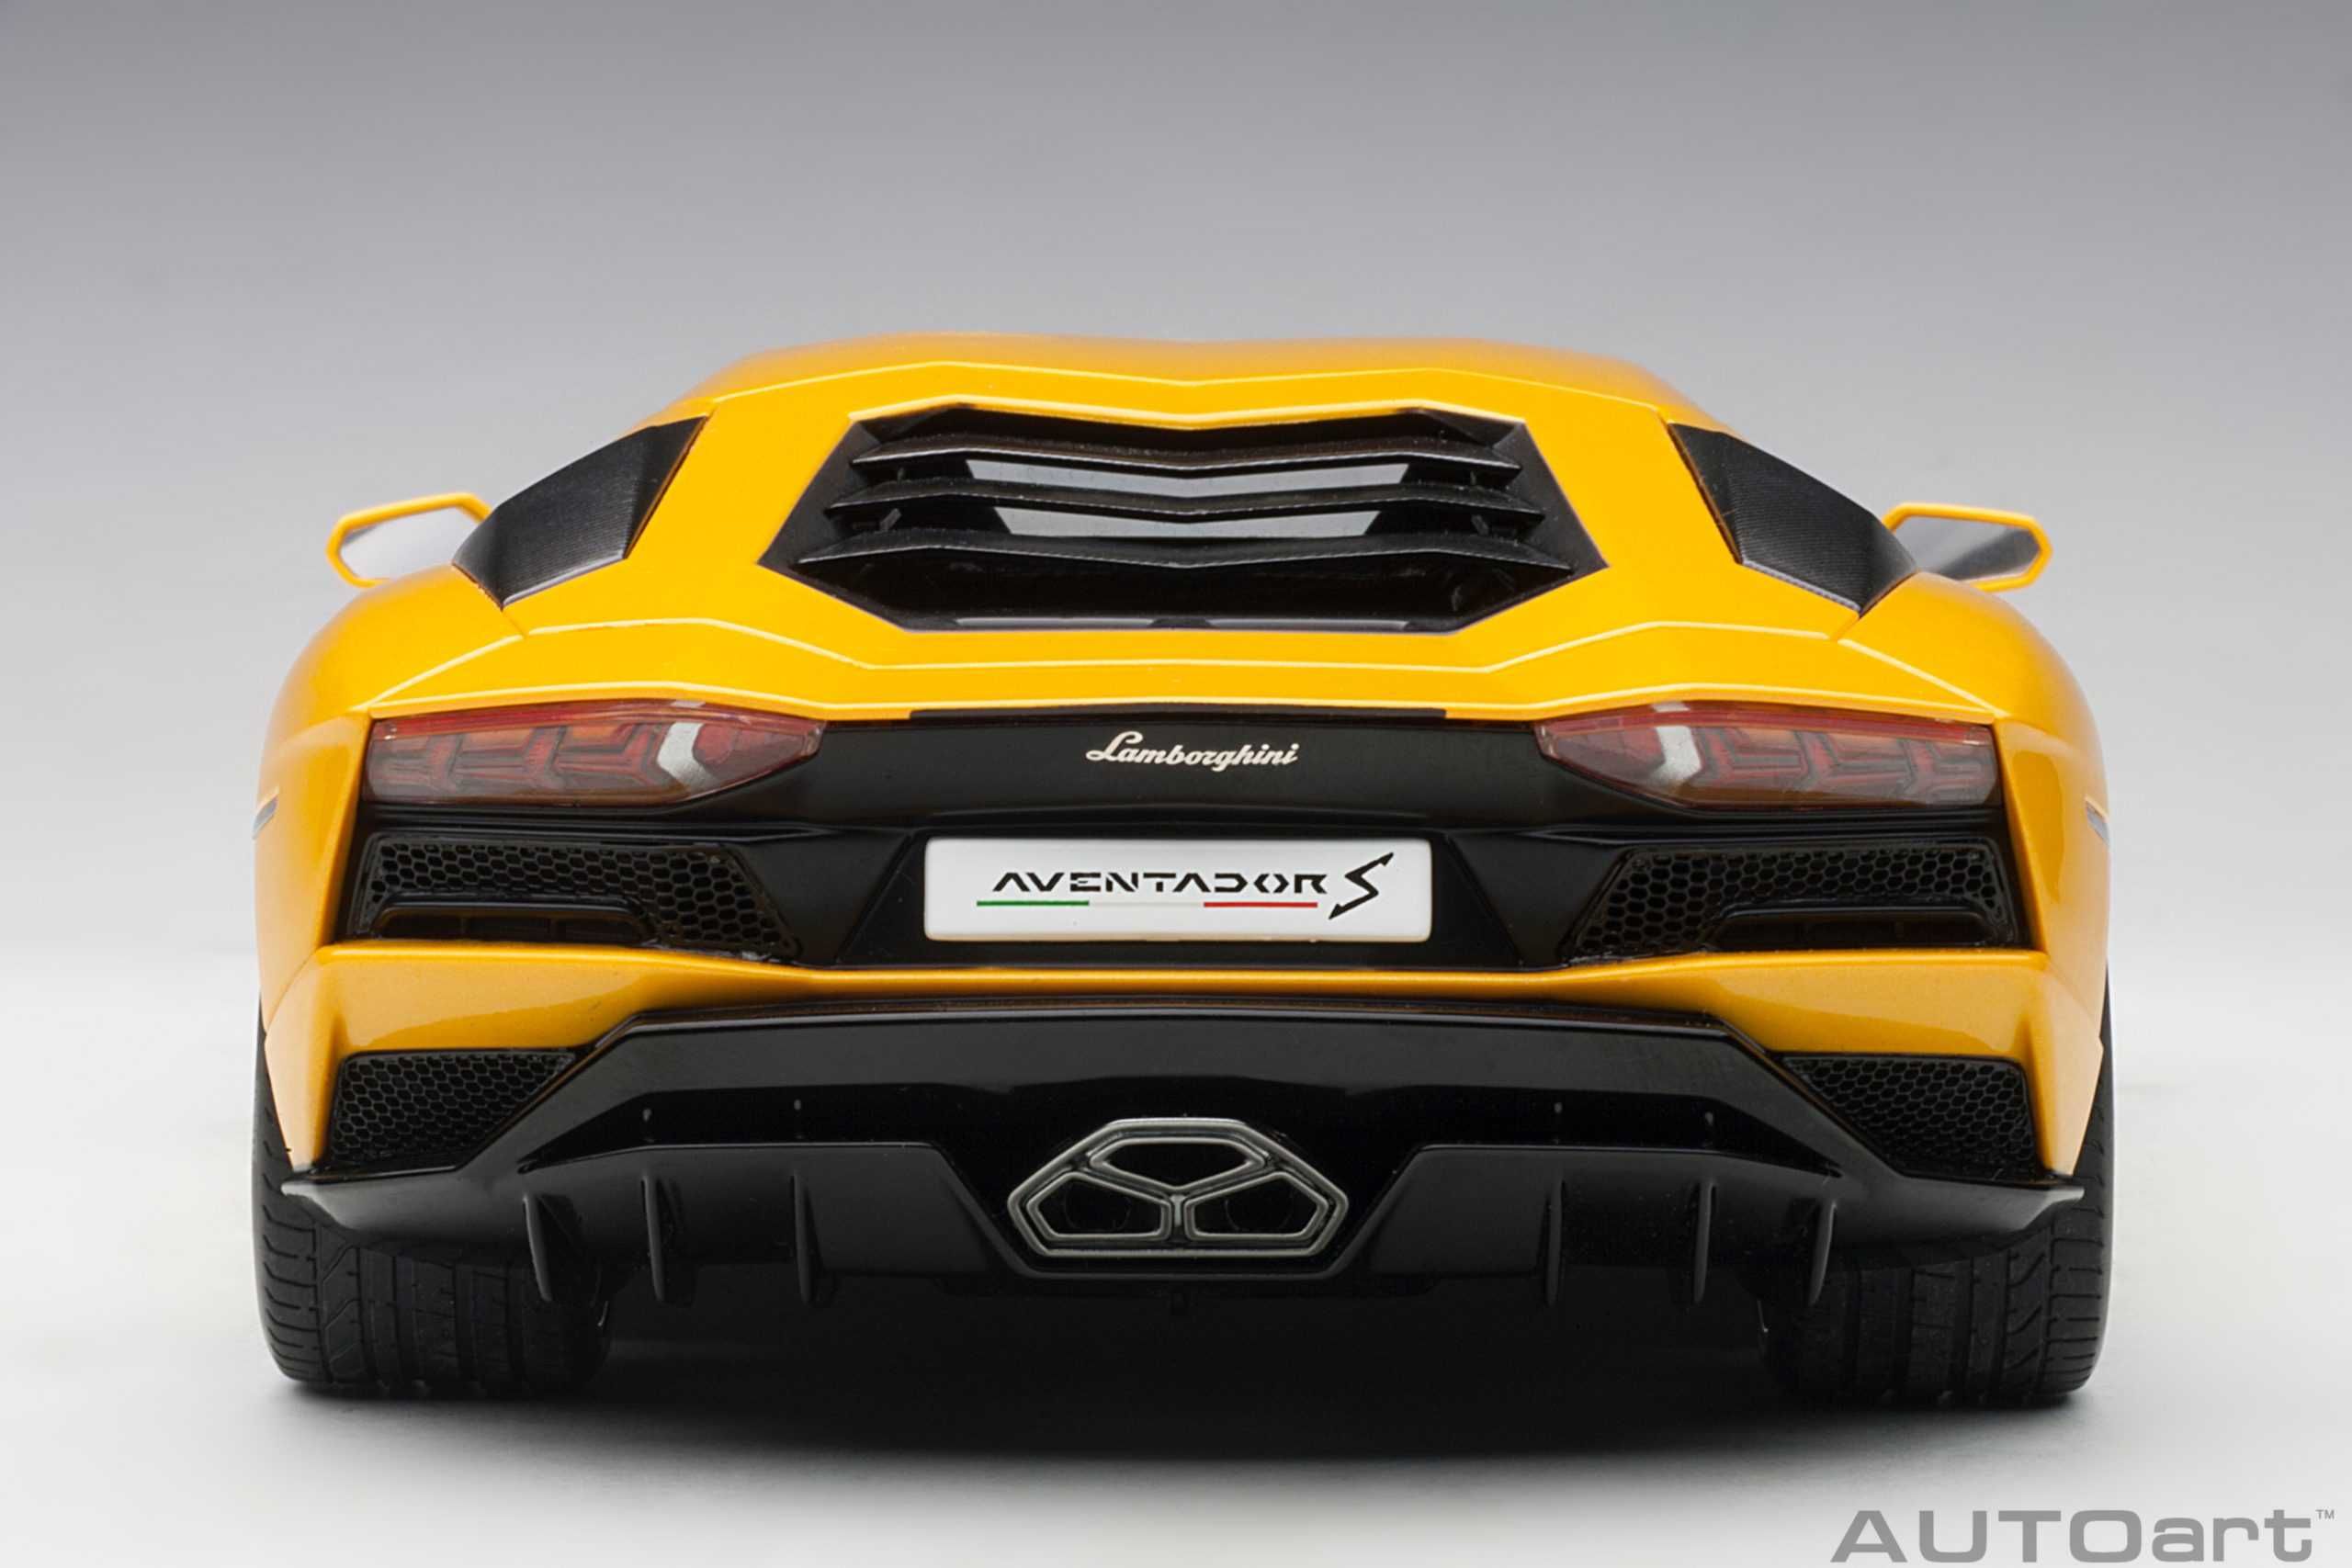 1:18 AUTOart Lamborghini Aventador S 2017 yellow